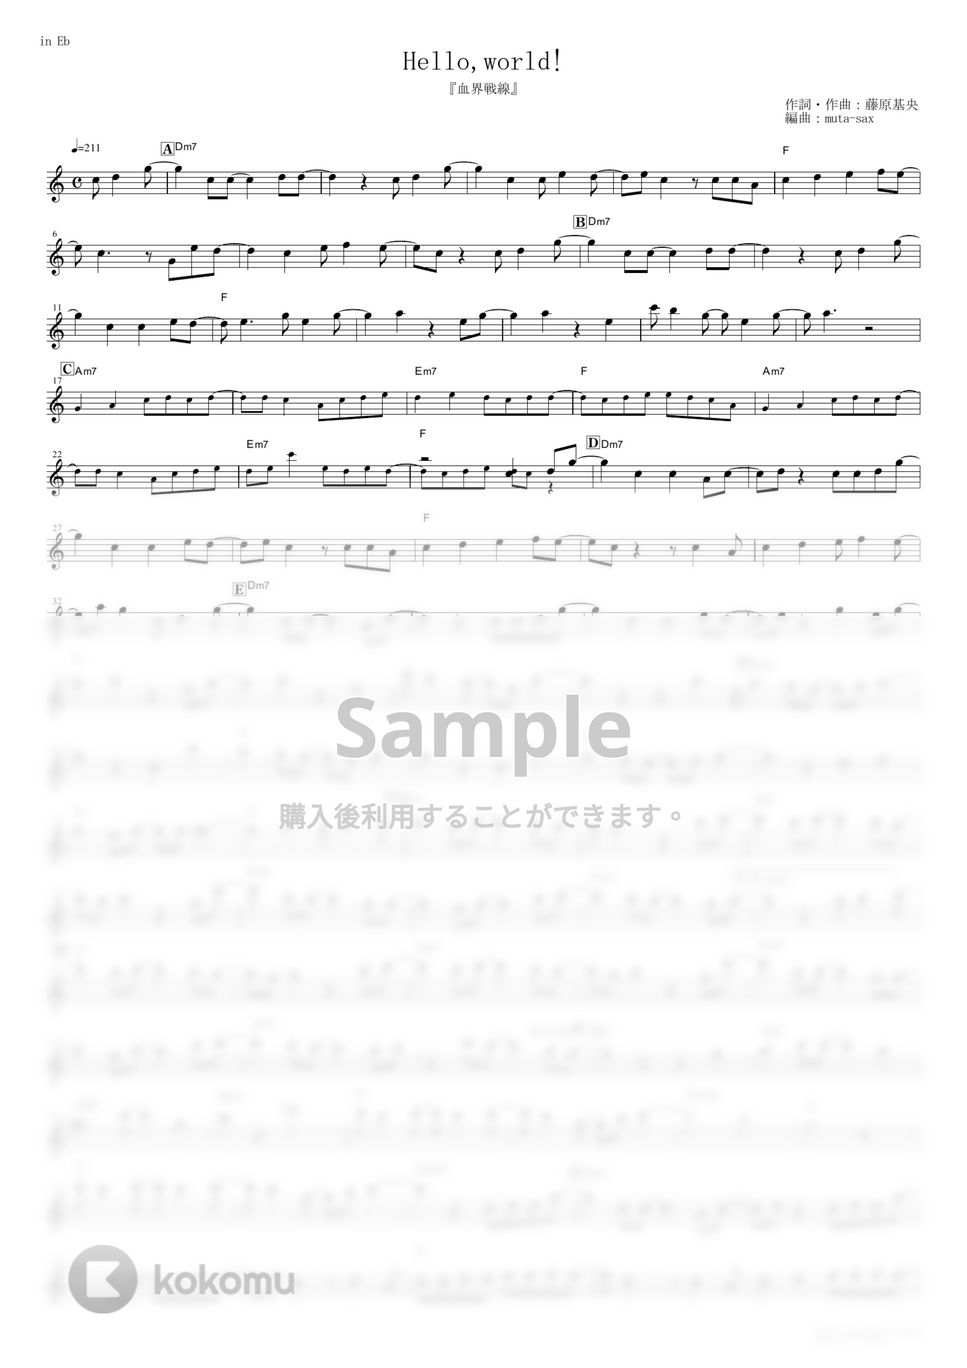 BUMP OF CHICKEN - Hello,world! (『血界戦線』 / in Eb) by muta-sax